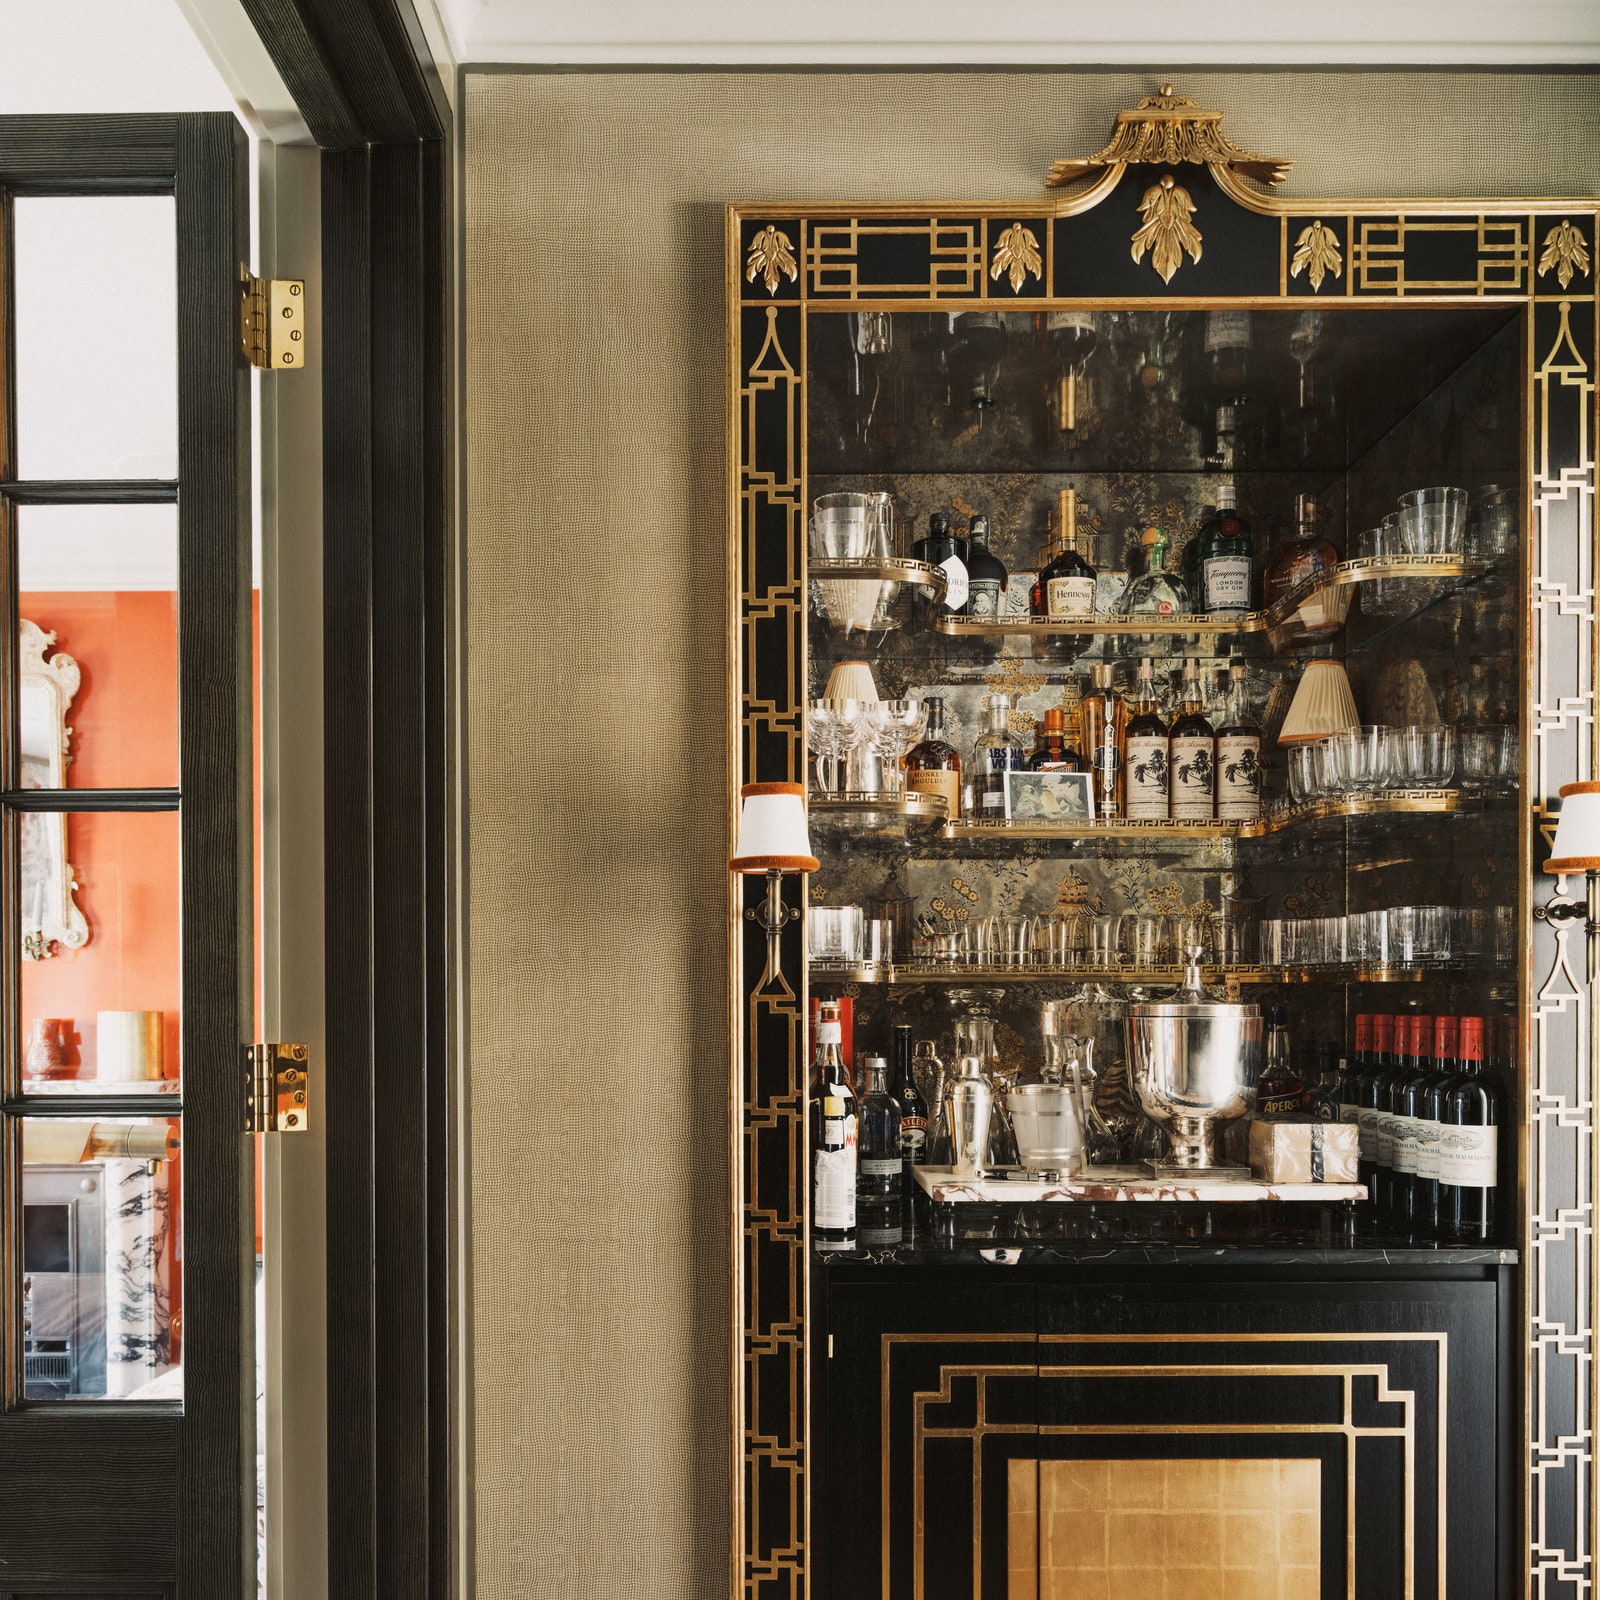 Home bar ideas: How to set up an elegant cocktail bar